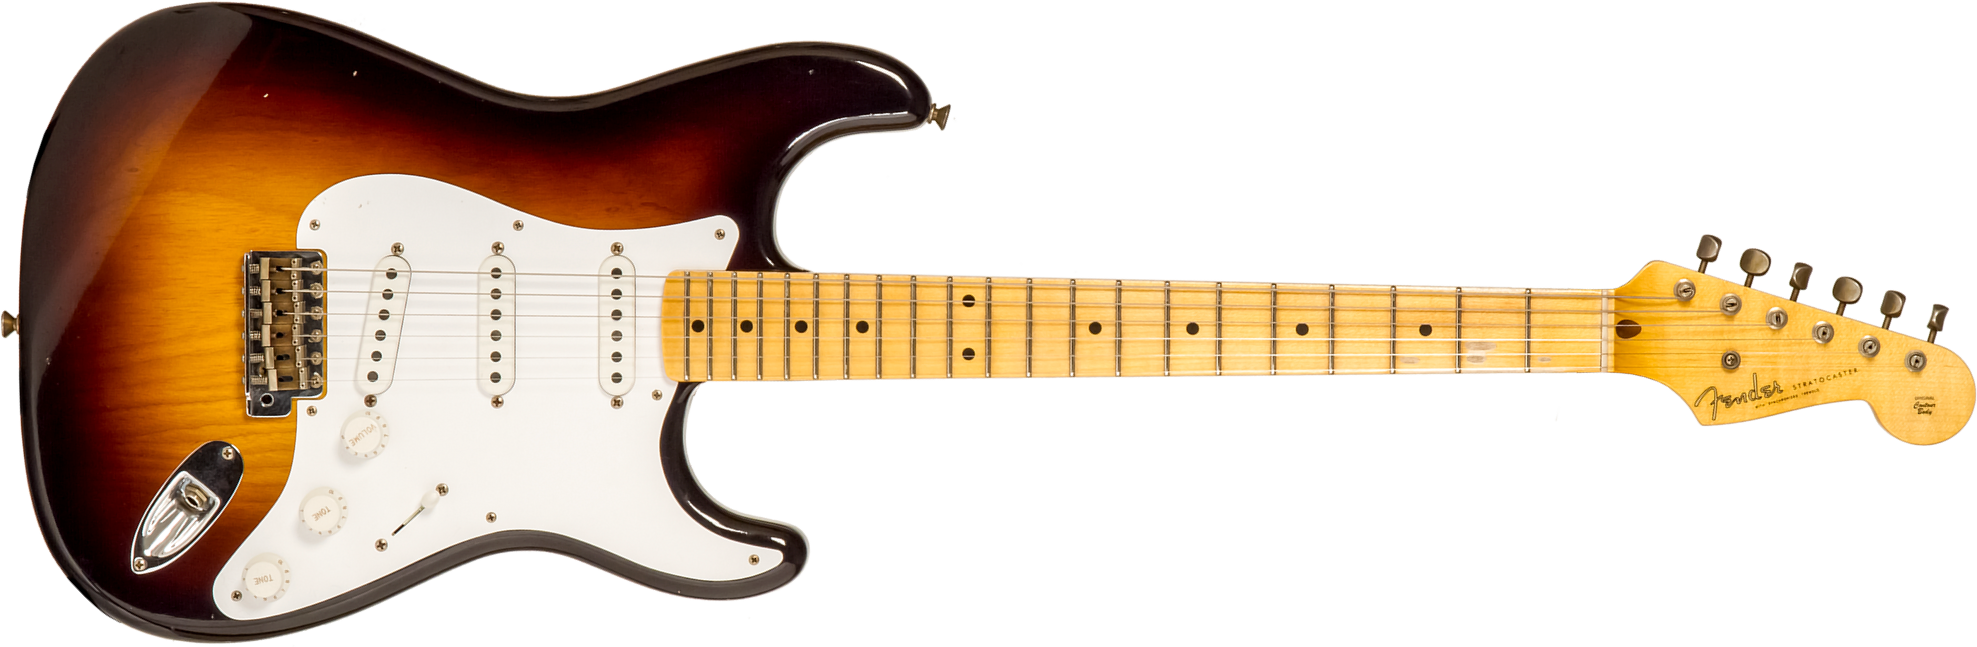 Fender Custom Shop Strat 1954 70th Anniv. 3s Trem Mn #xn4193 - Journeyman Relic Wide-fade 2-color Sunburst - Guitarra eléctrica con forma de str. - Ma